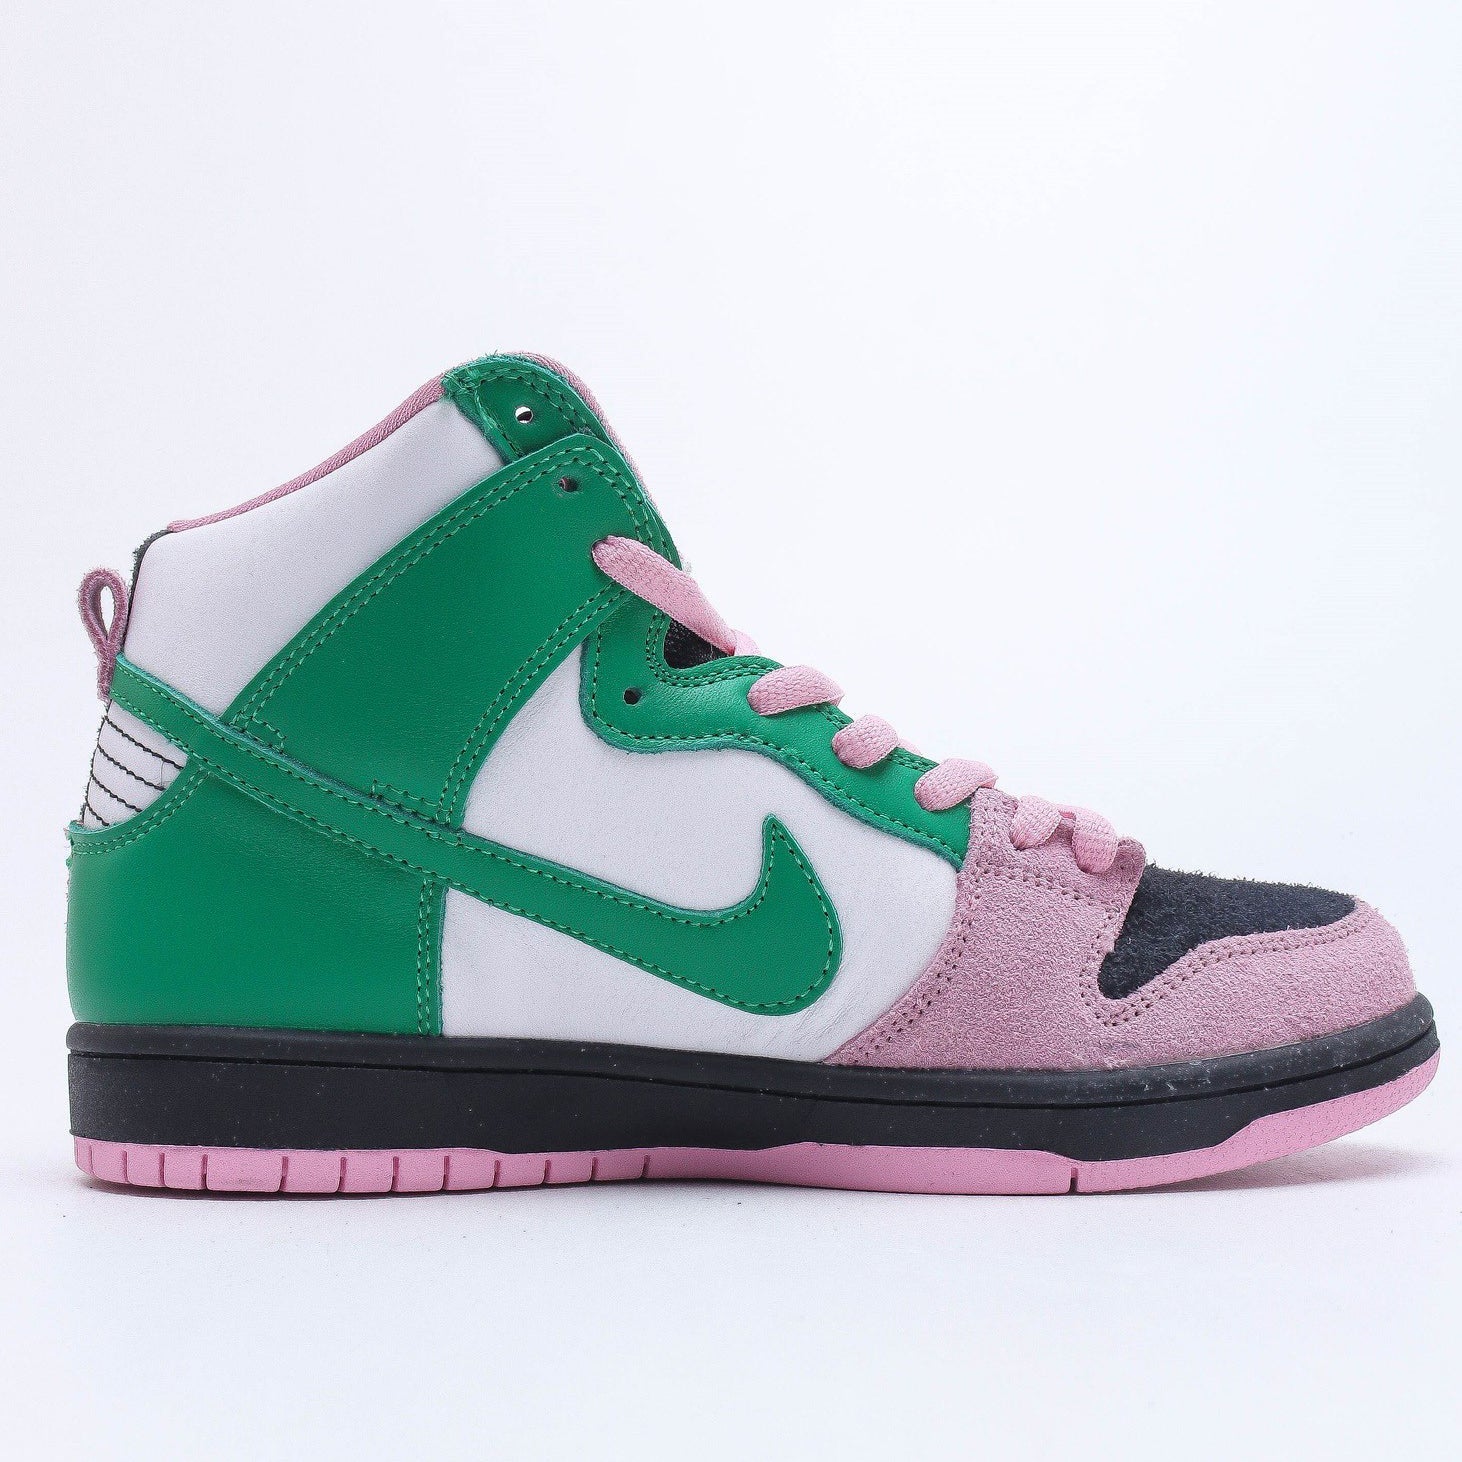 Nike SB Dunk High Invert Celtics Sneakers Shoes